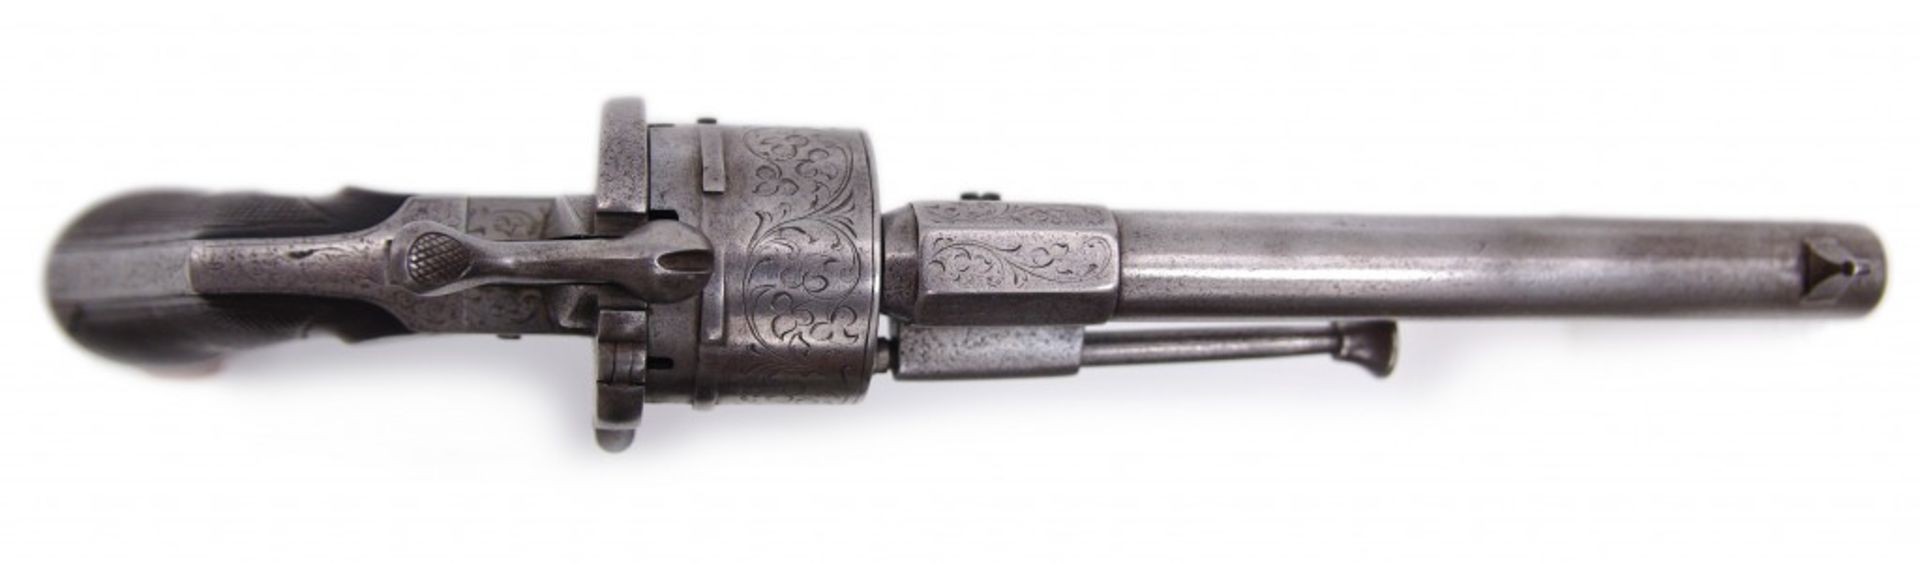 A Pinfire Revolver - Image 3 of 5